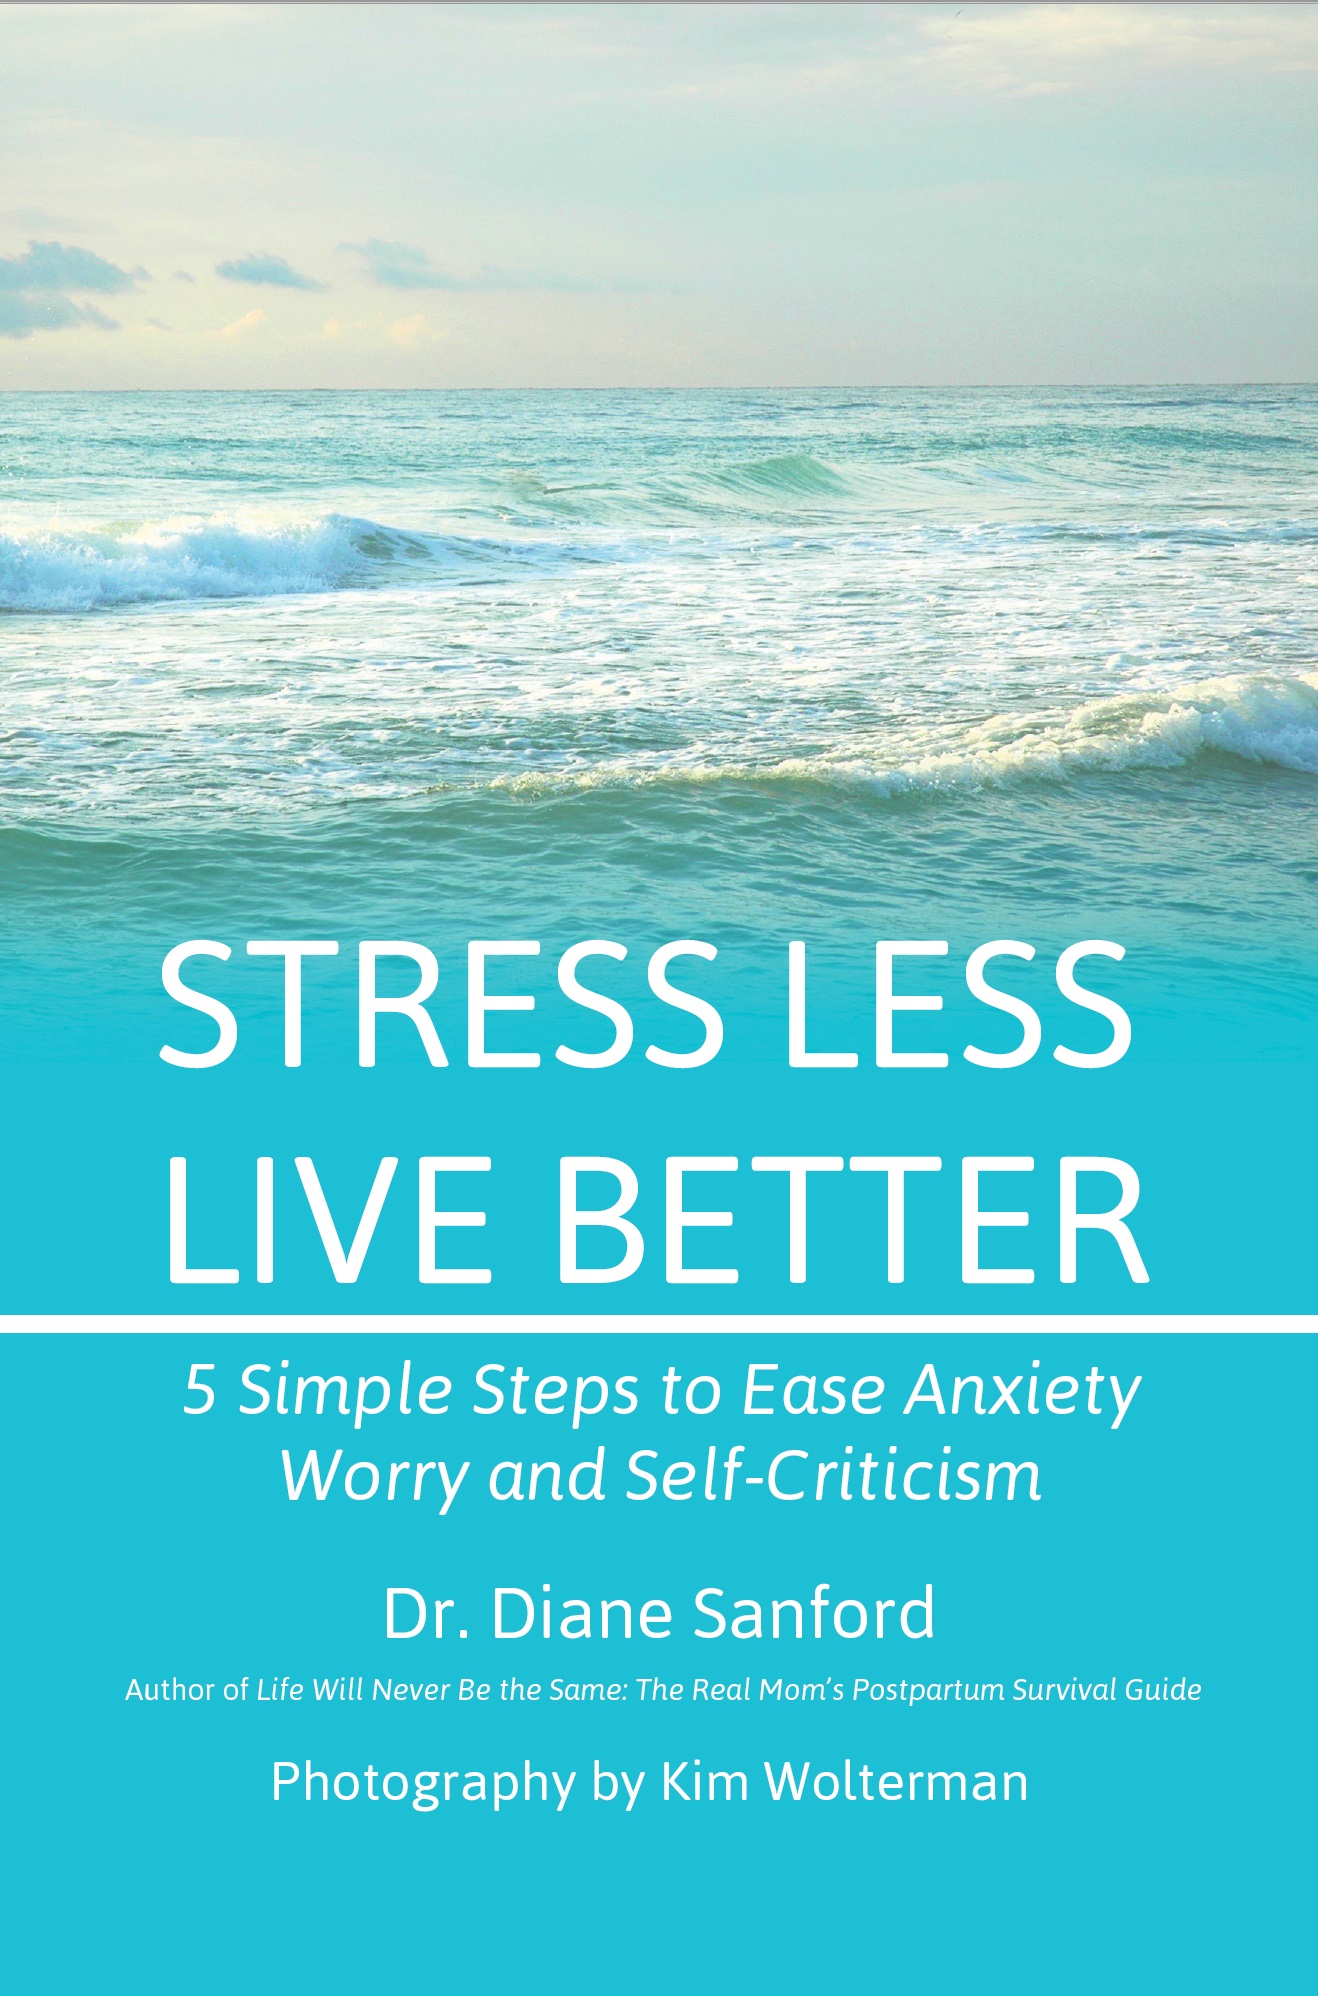 Stress Less, Live Better by Dr. Diane Sanford